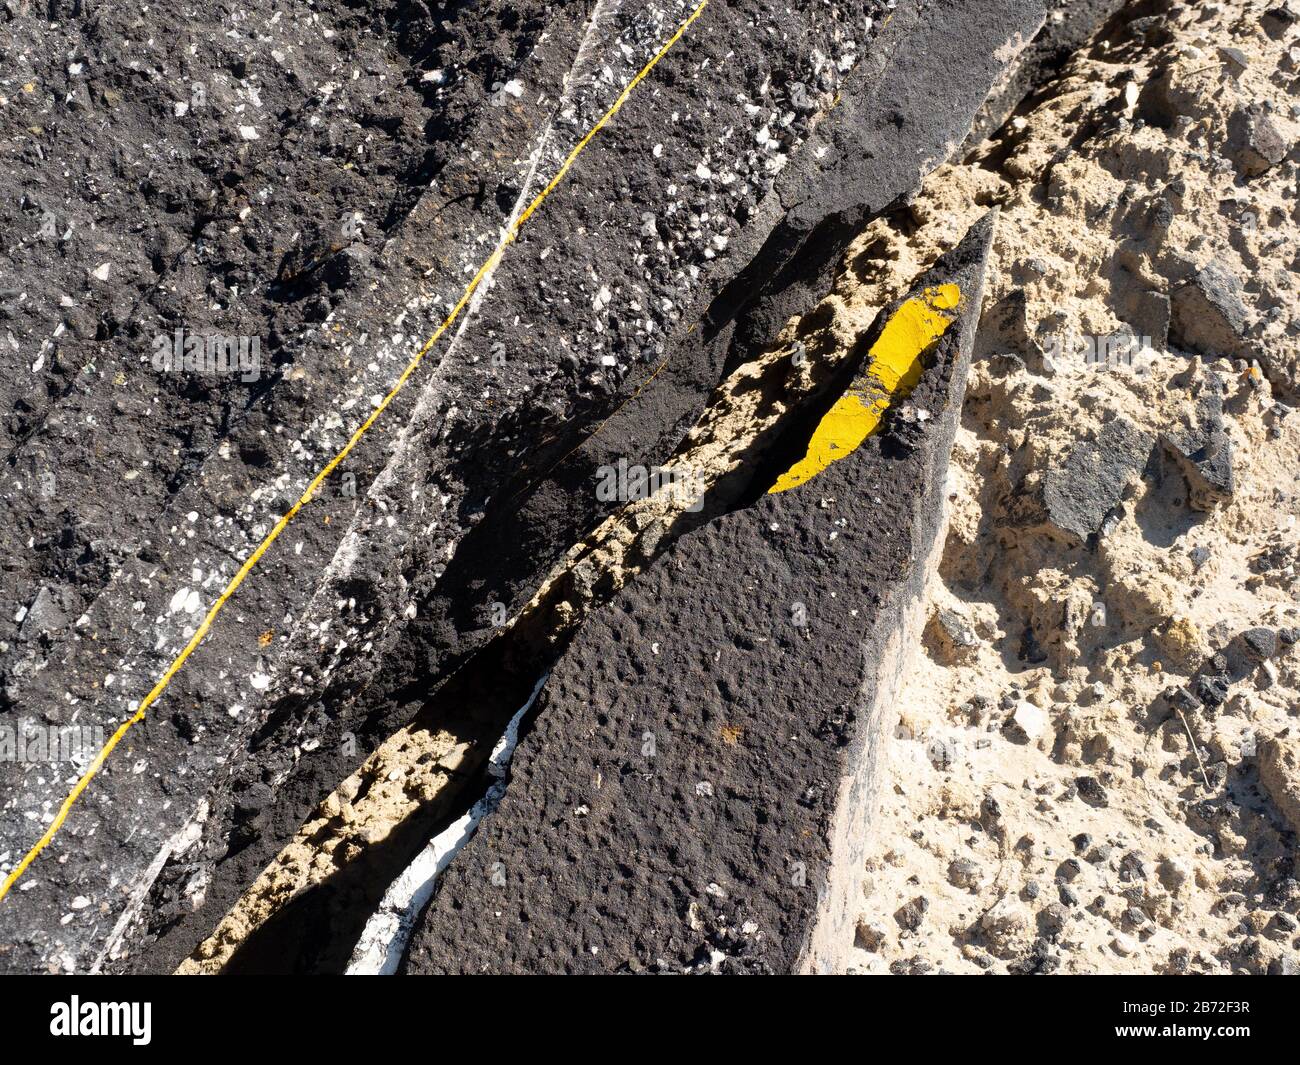 Road Asphalt Debris, close-up Section of fractured Asphalt Pavement surface with fragment of Painted Yellow Line, Asphalt Rubble, Tarmac Rubble Stock Photo